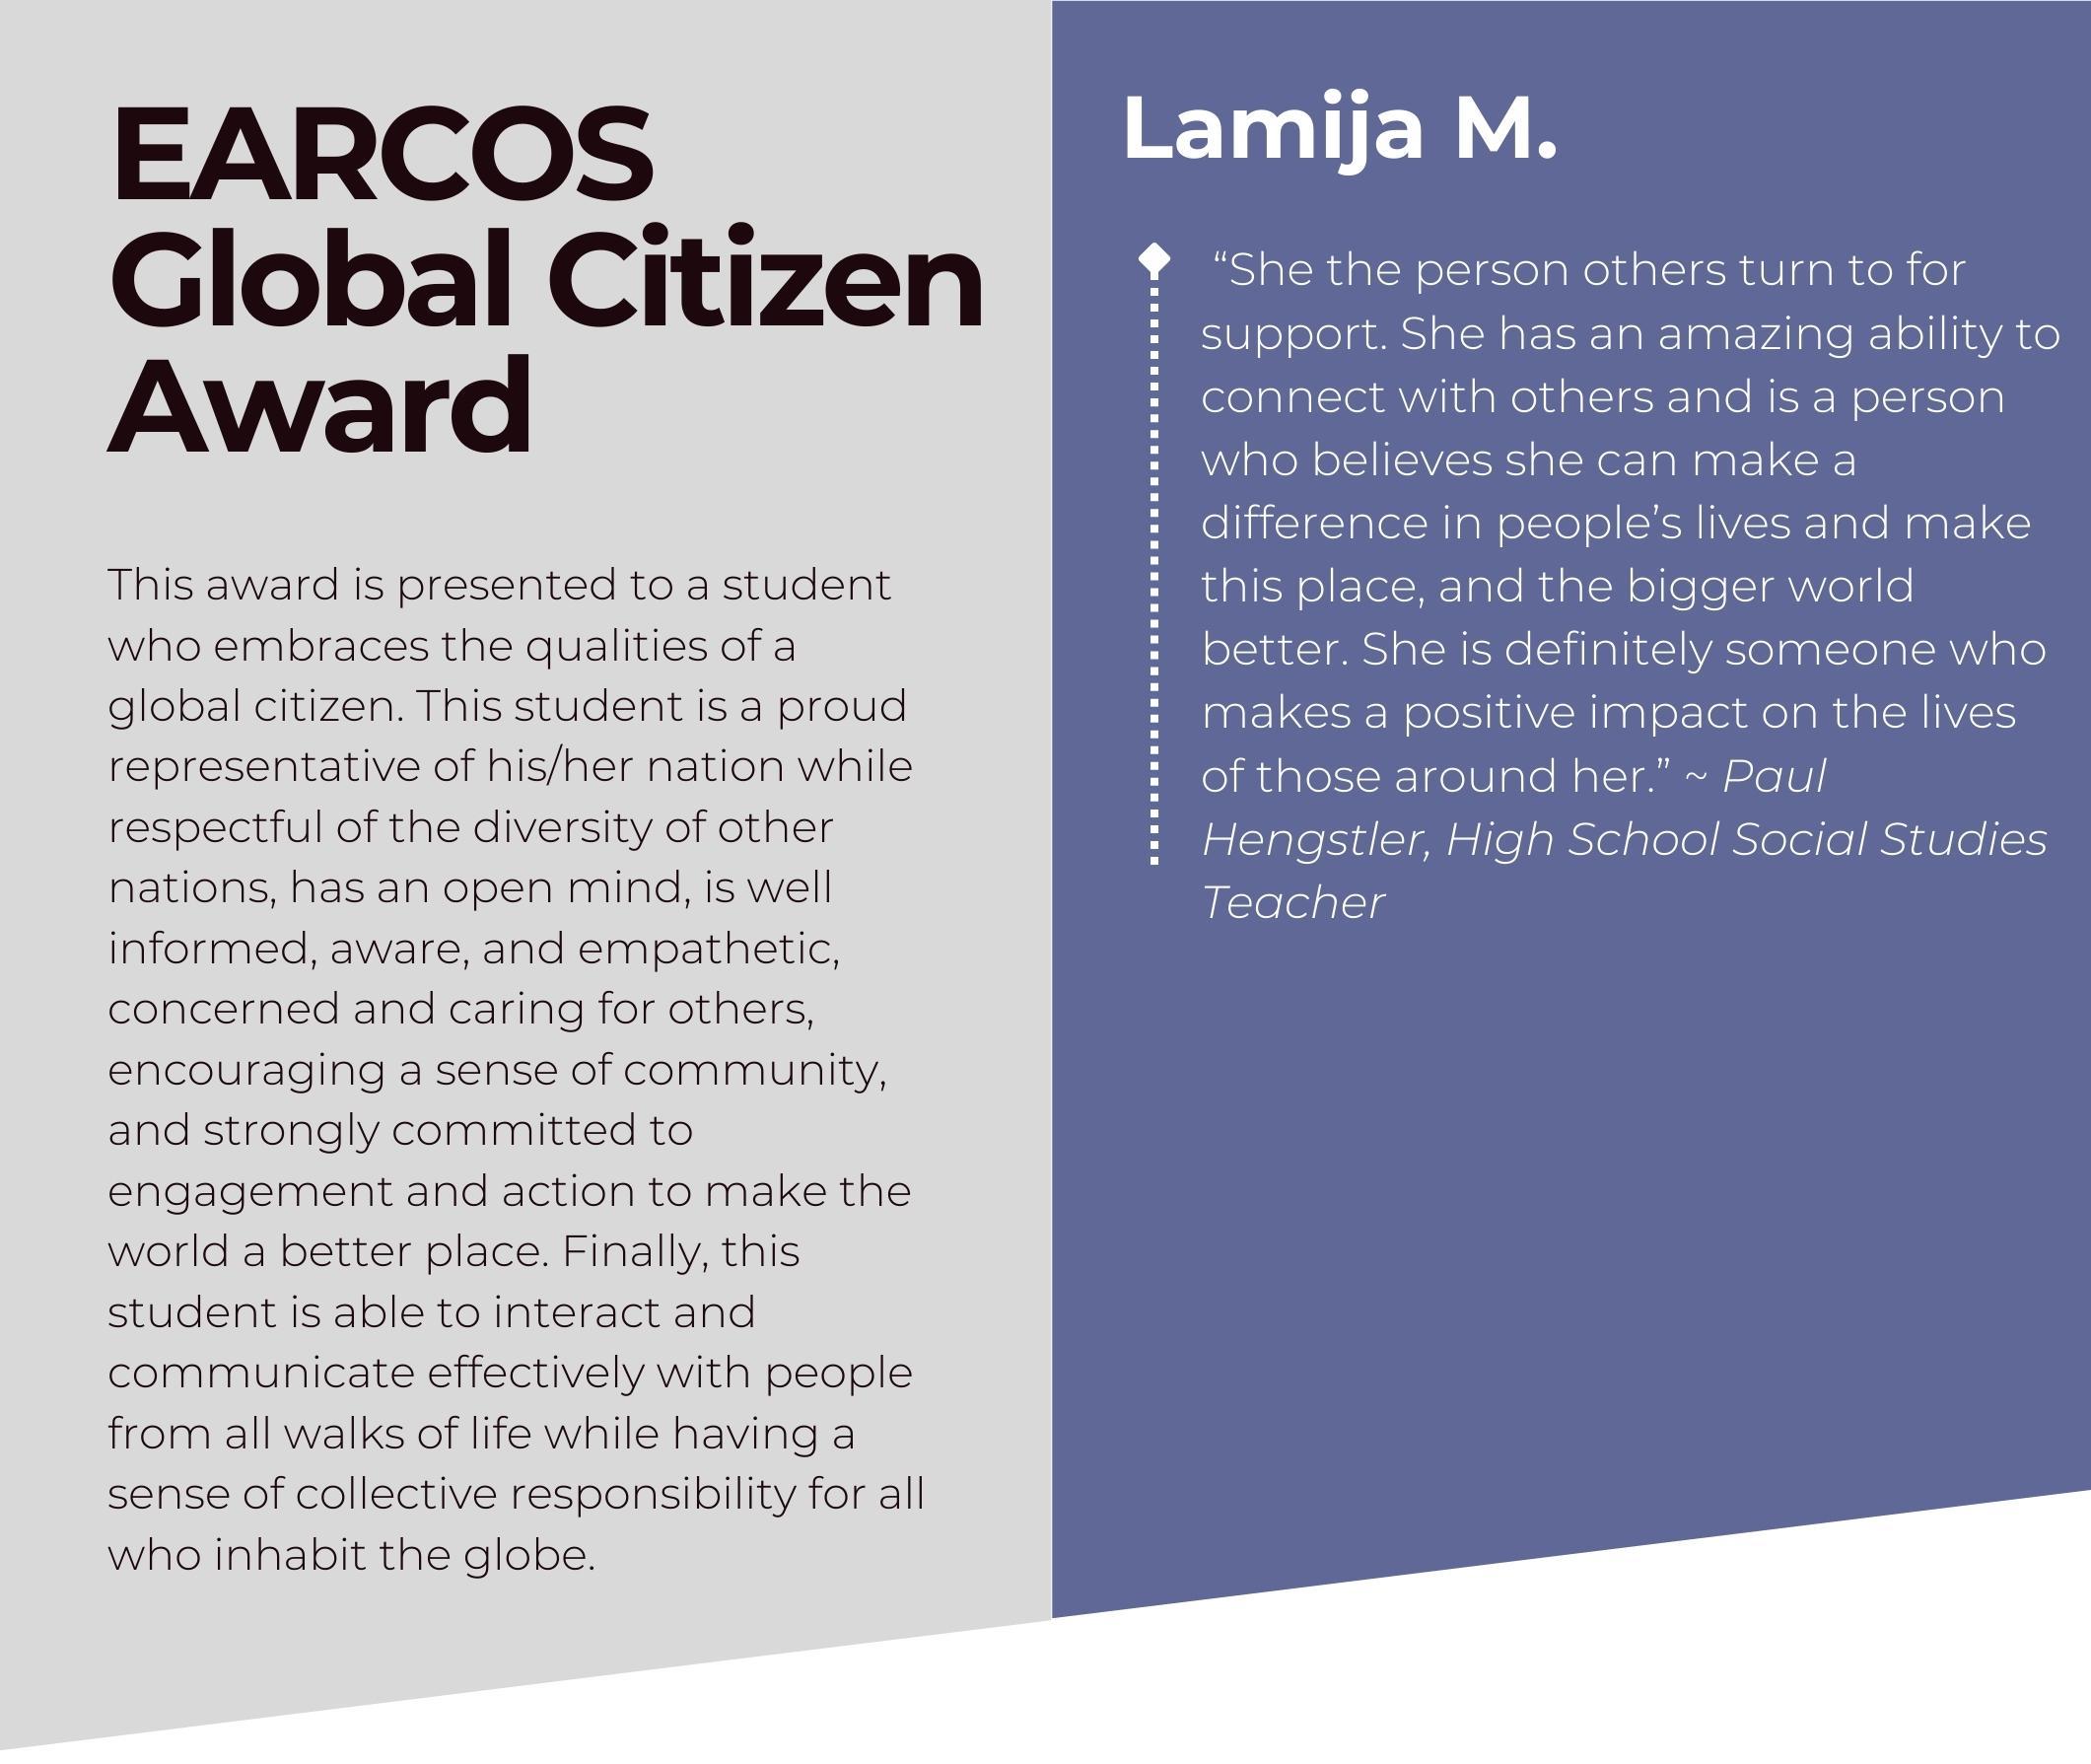 EARCOS Global Citizen Award Recipients